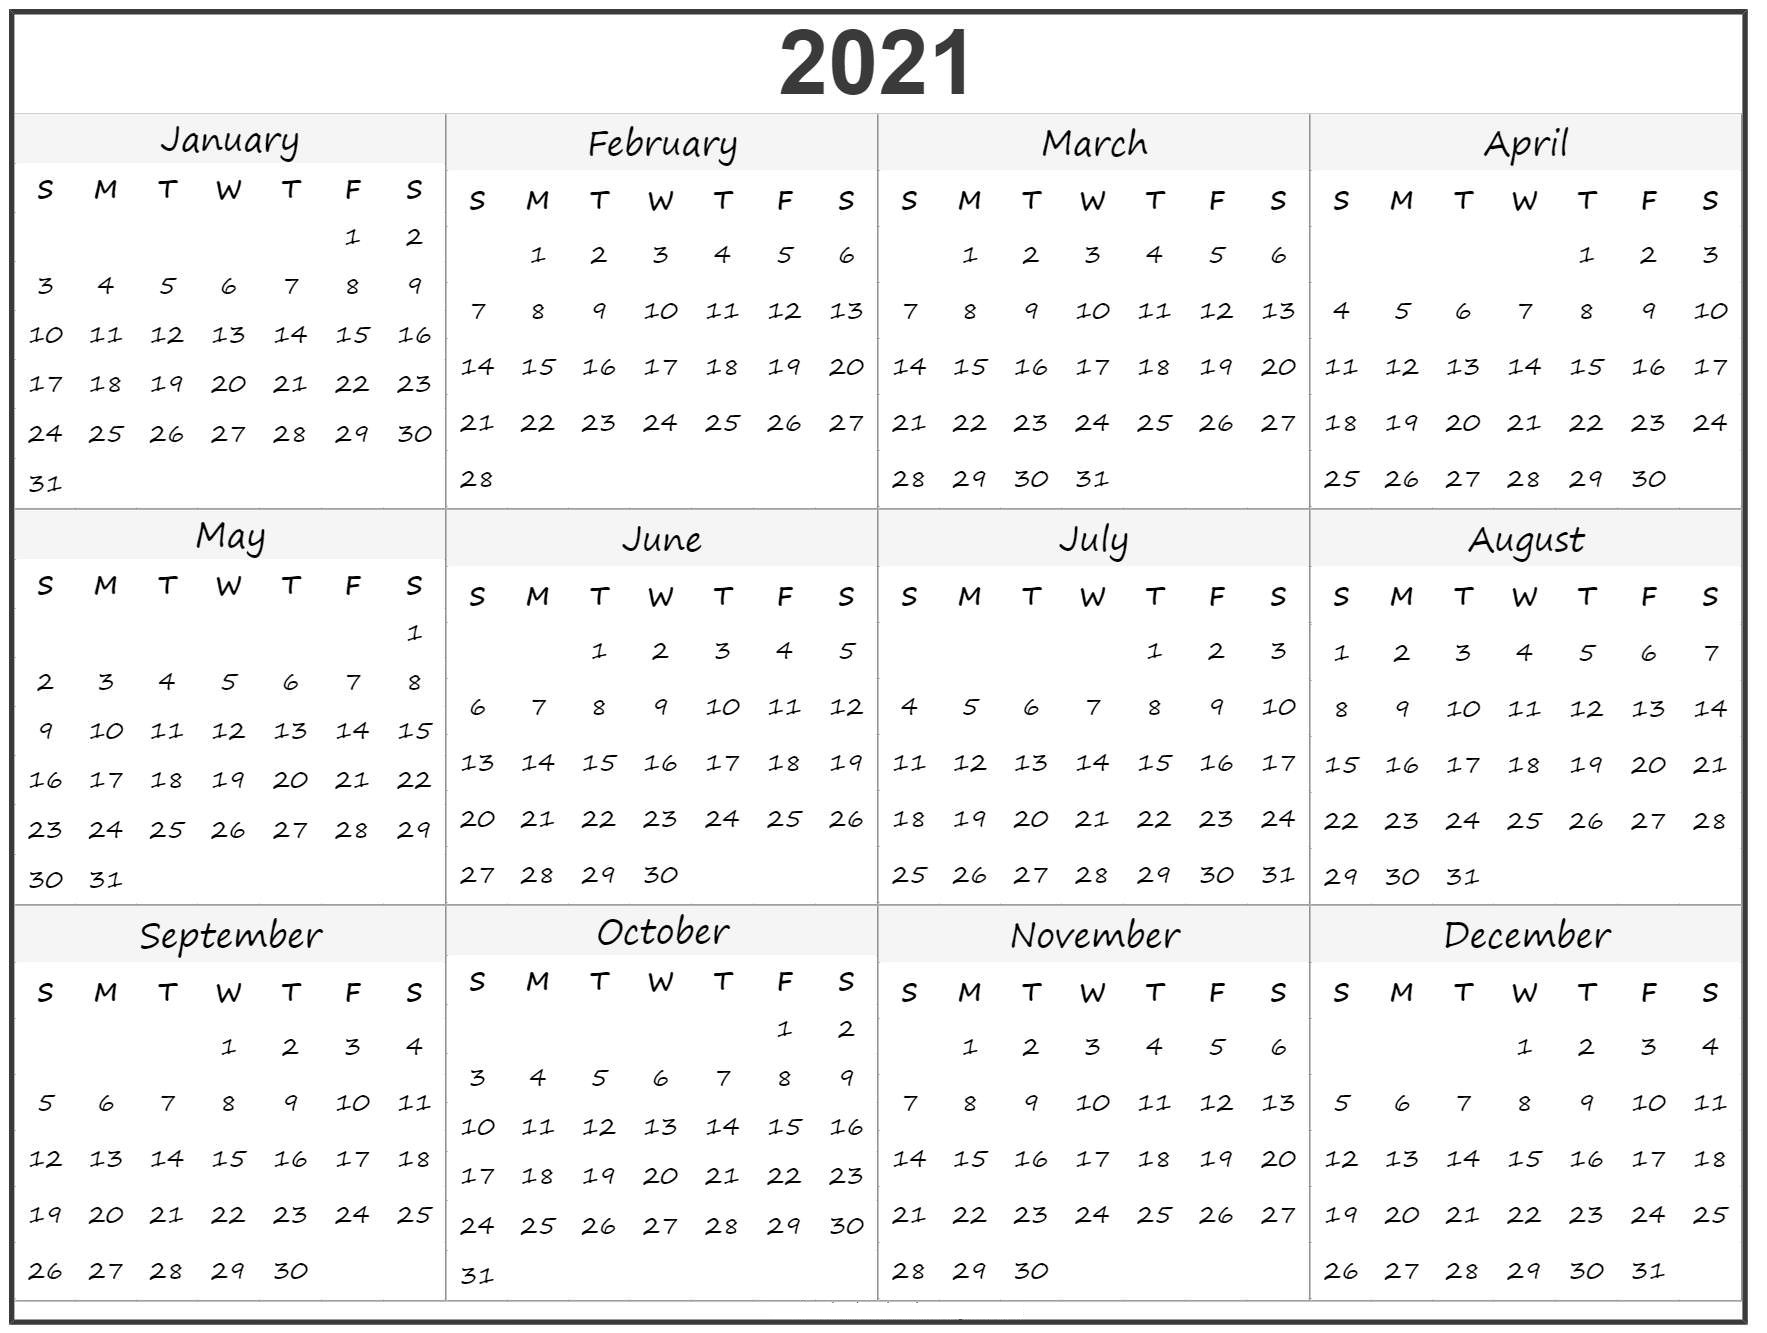 2021 Calendar Printable With Holidays - Printable Calendar-2021 Free Downloand Vacation Spreadsheet